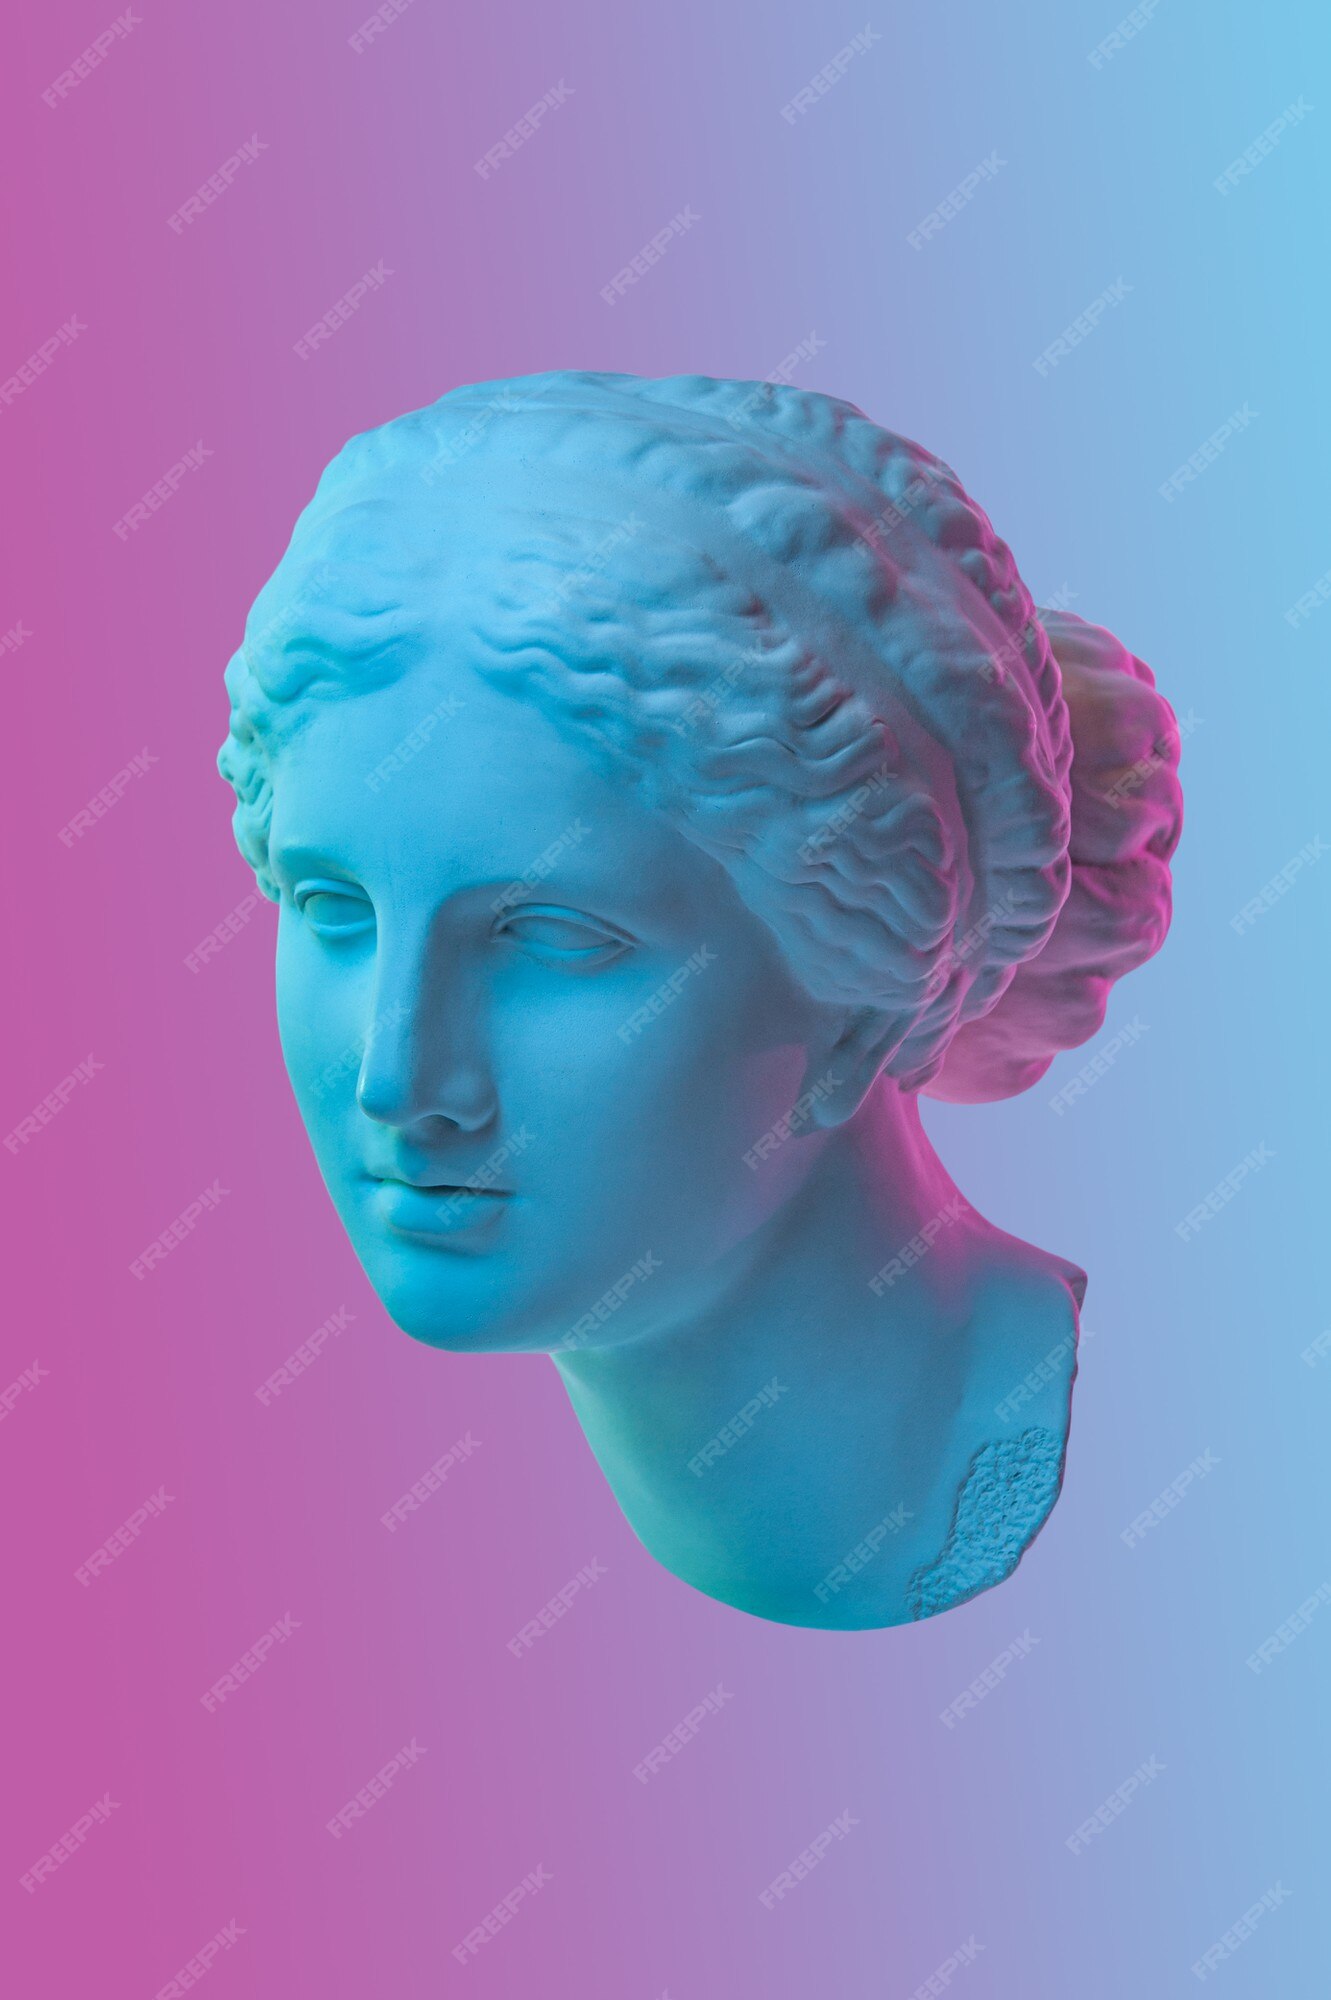 Premium Photo | Statue of venus de milo. creative concept colorful neon  image with ancient greek sculpture venus or aphrodite head. webpunk,  vaporwave and surreal art style. pink and blue duotone effects.